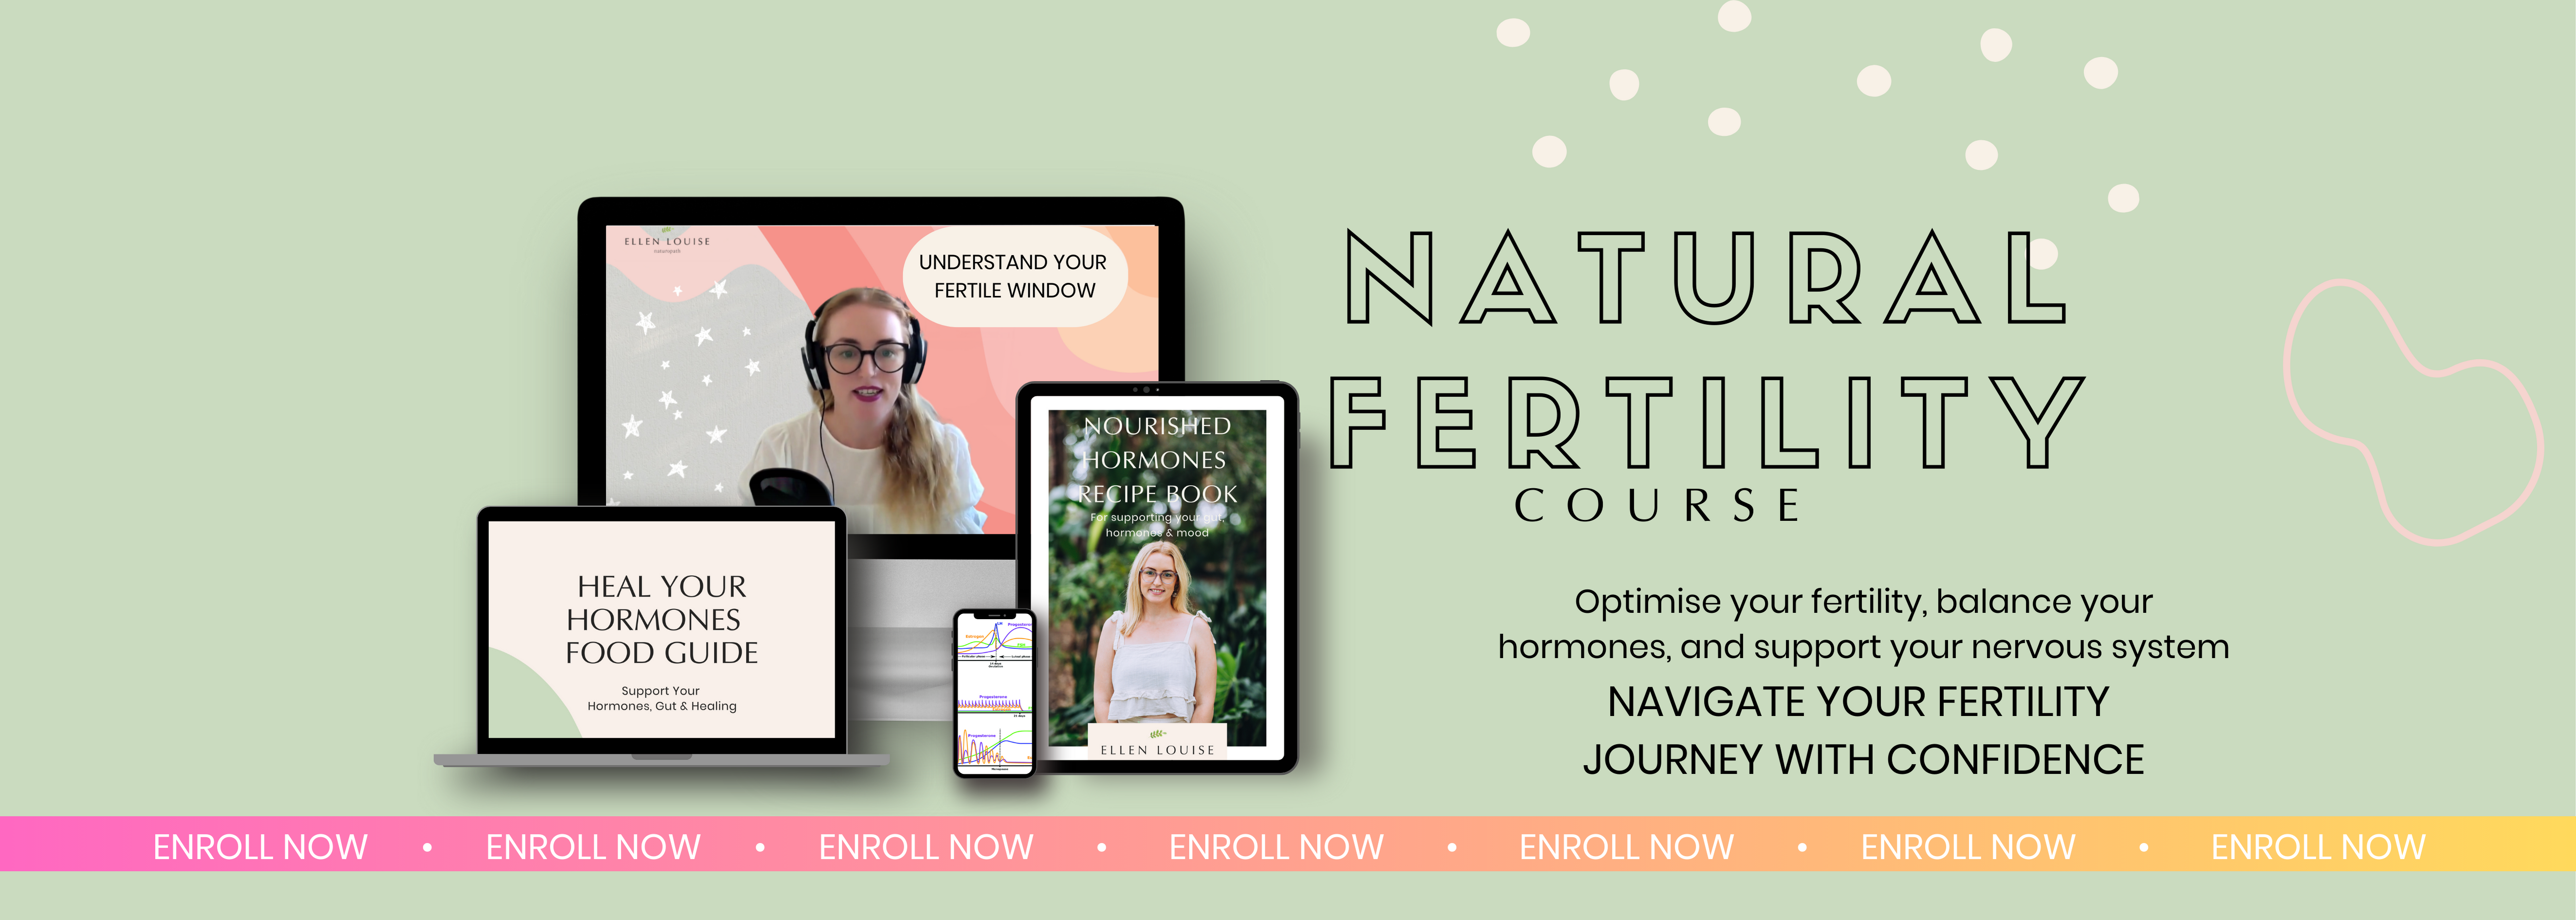 natural fertility 4 week online course